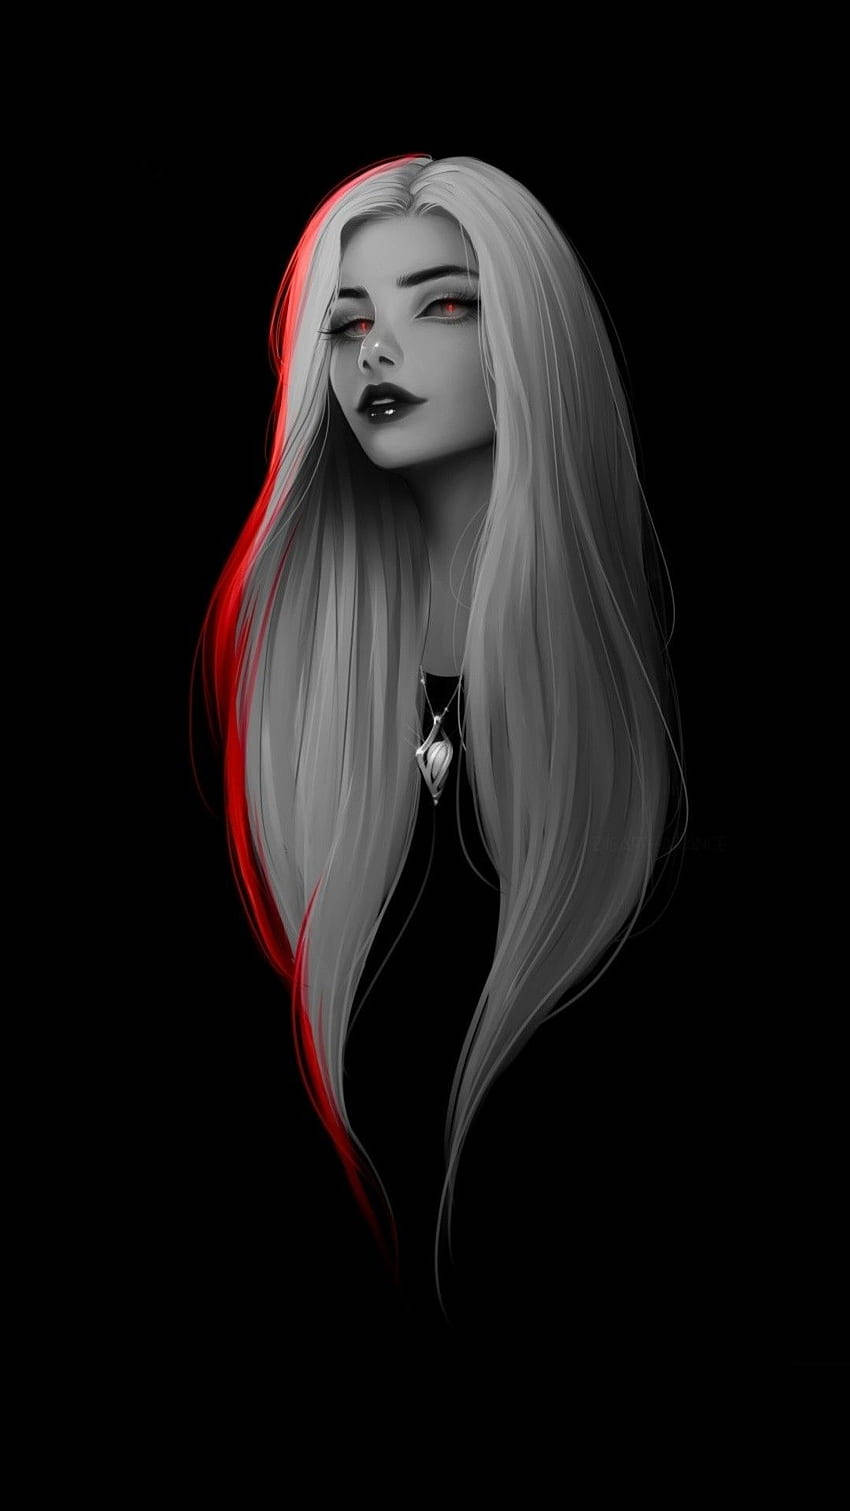 Red-eyed Sad Demon Girl Wallpaper